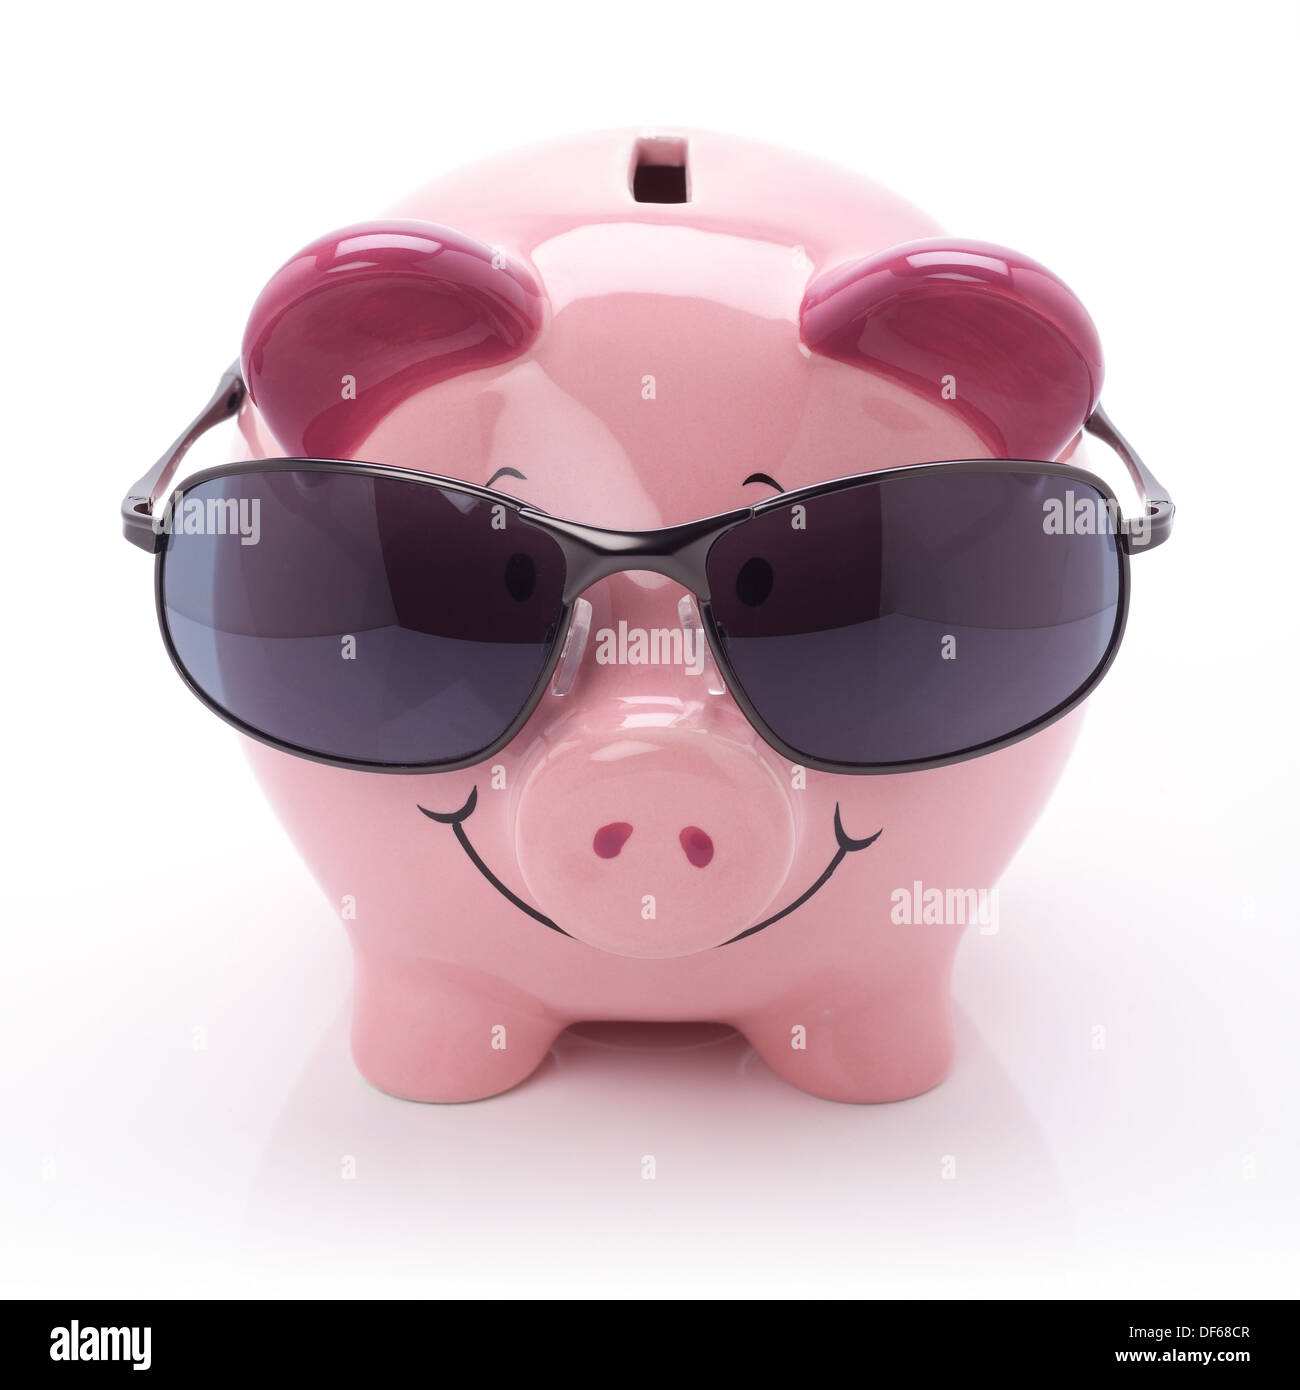 Ceramica rosa salvadanaio indossando occhiali da sole Foto Stock